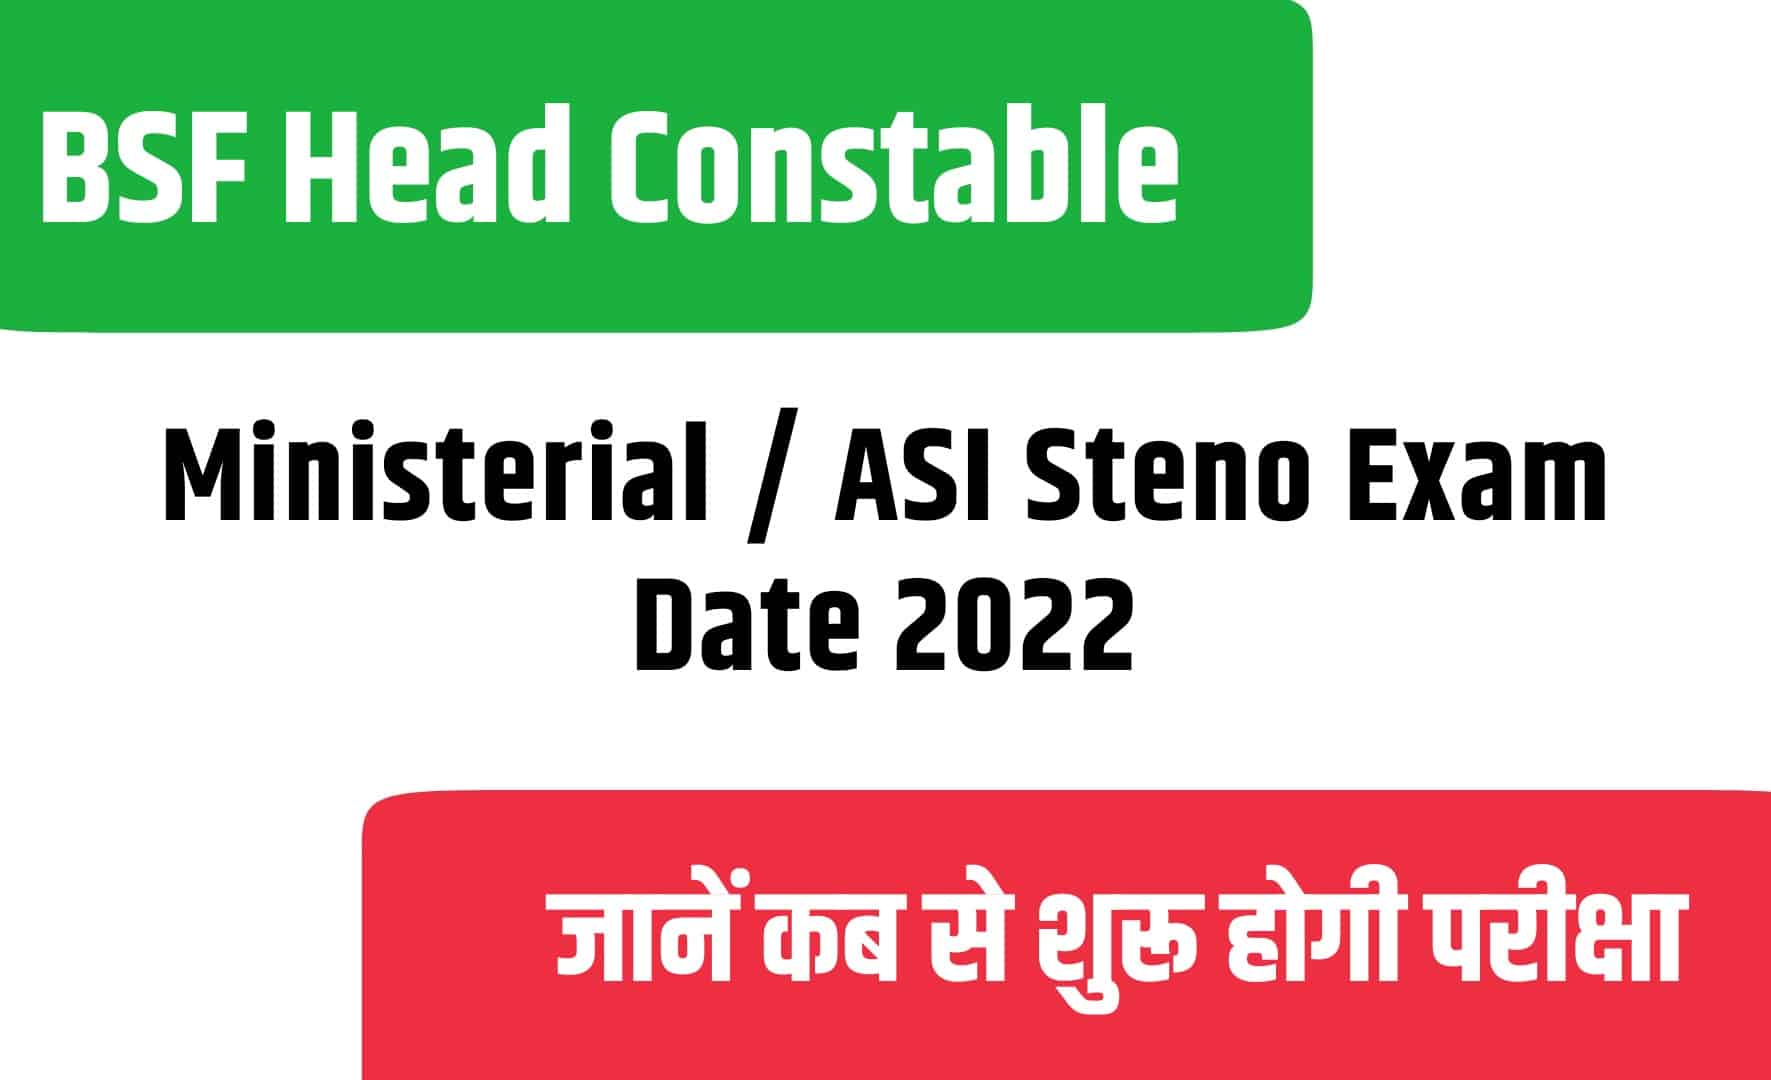 BSF Head Constable Ministerial / ASI Steno Exam Date 2022 | बीएसएफ कॉन्स्टेबल परीक्षा तिथि